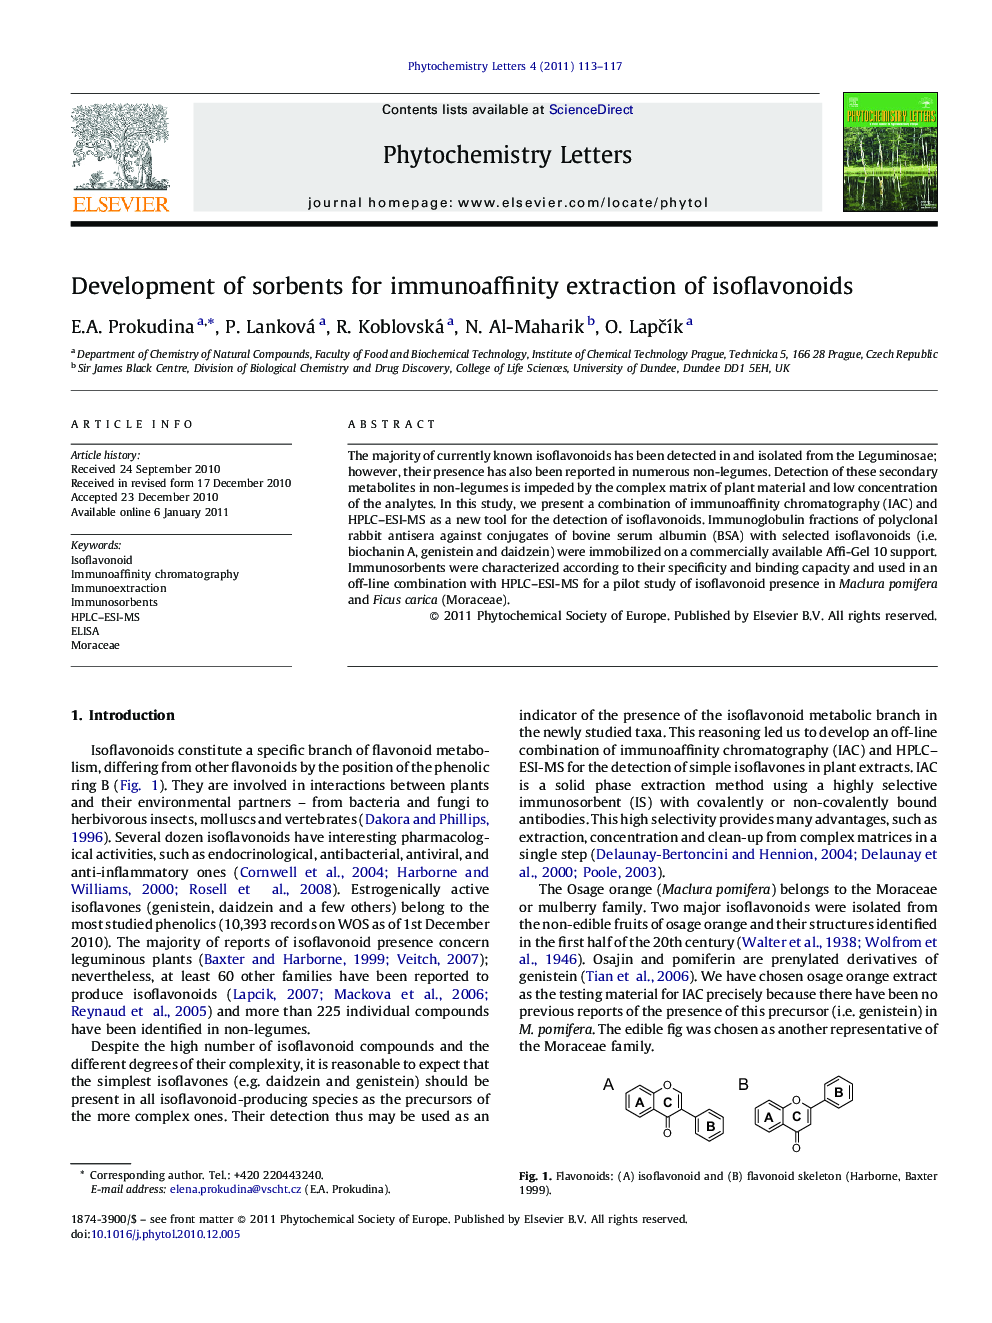 Development of sorbents for immunoaffinity extraction of isoflavonoids